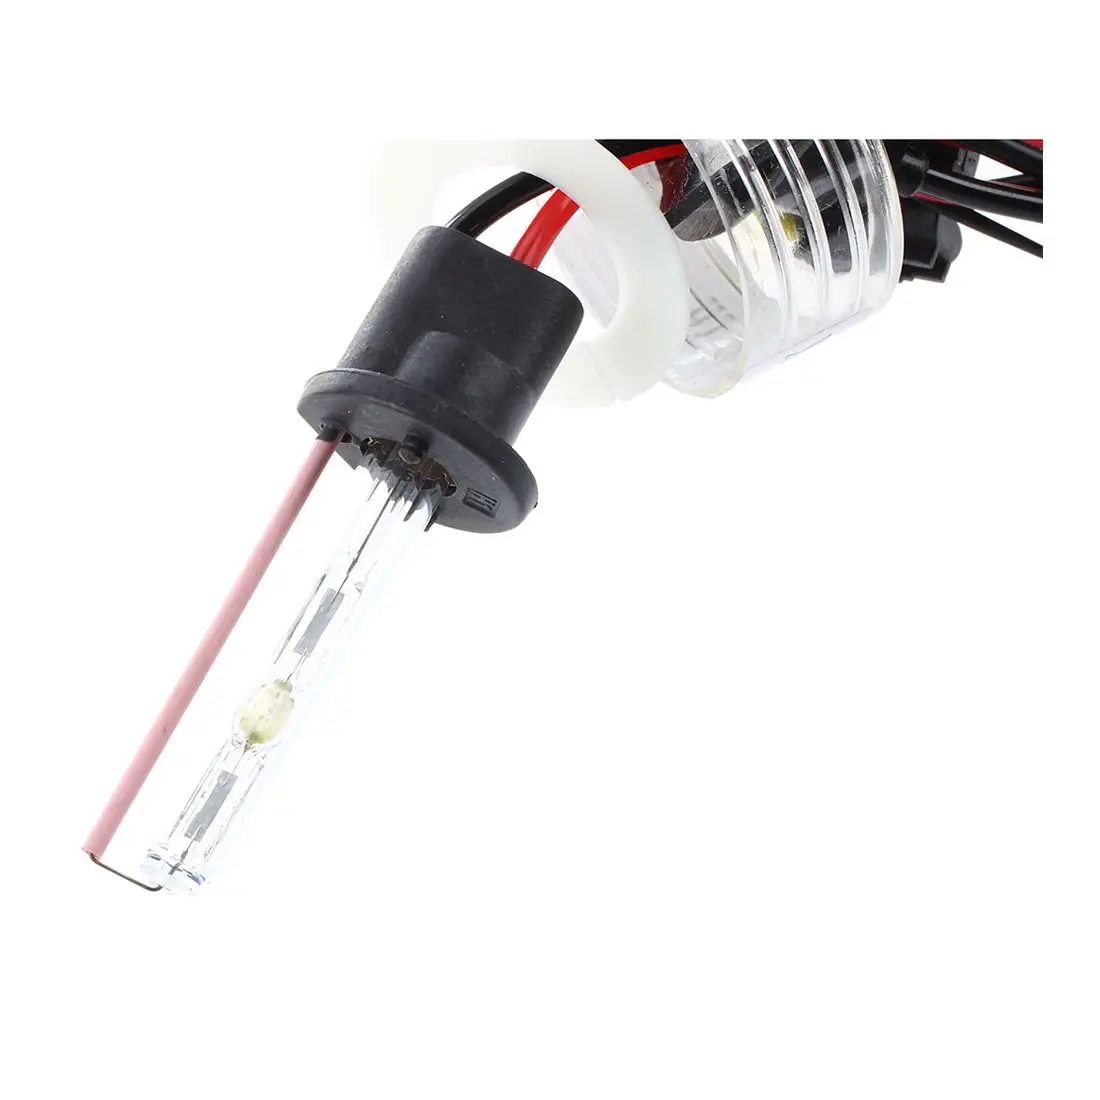 2 Stk.55W HID xenon lamp car bulb light kit Headlight 12V DC (H1 8000K) | Освещение